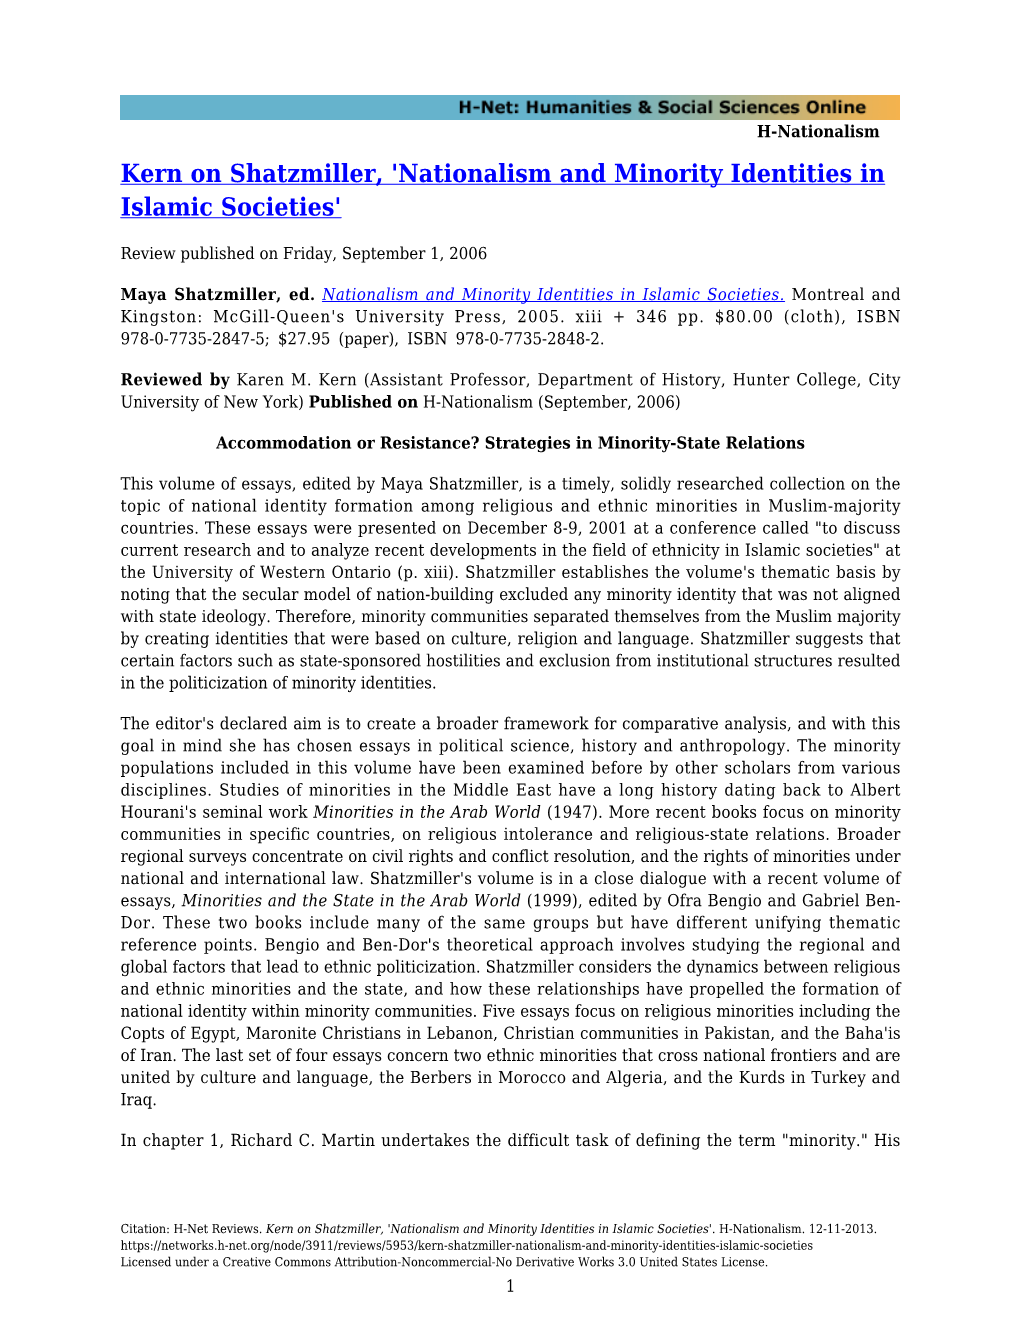 Nationalism and Minority Identities in Islamic Societies'